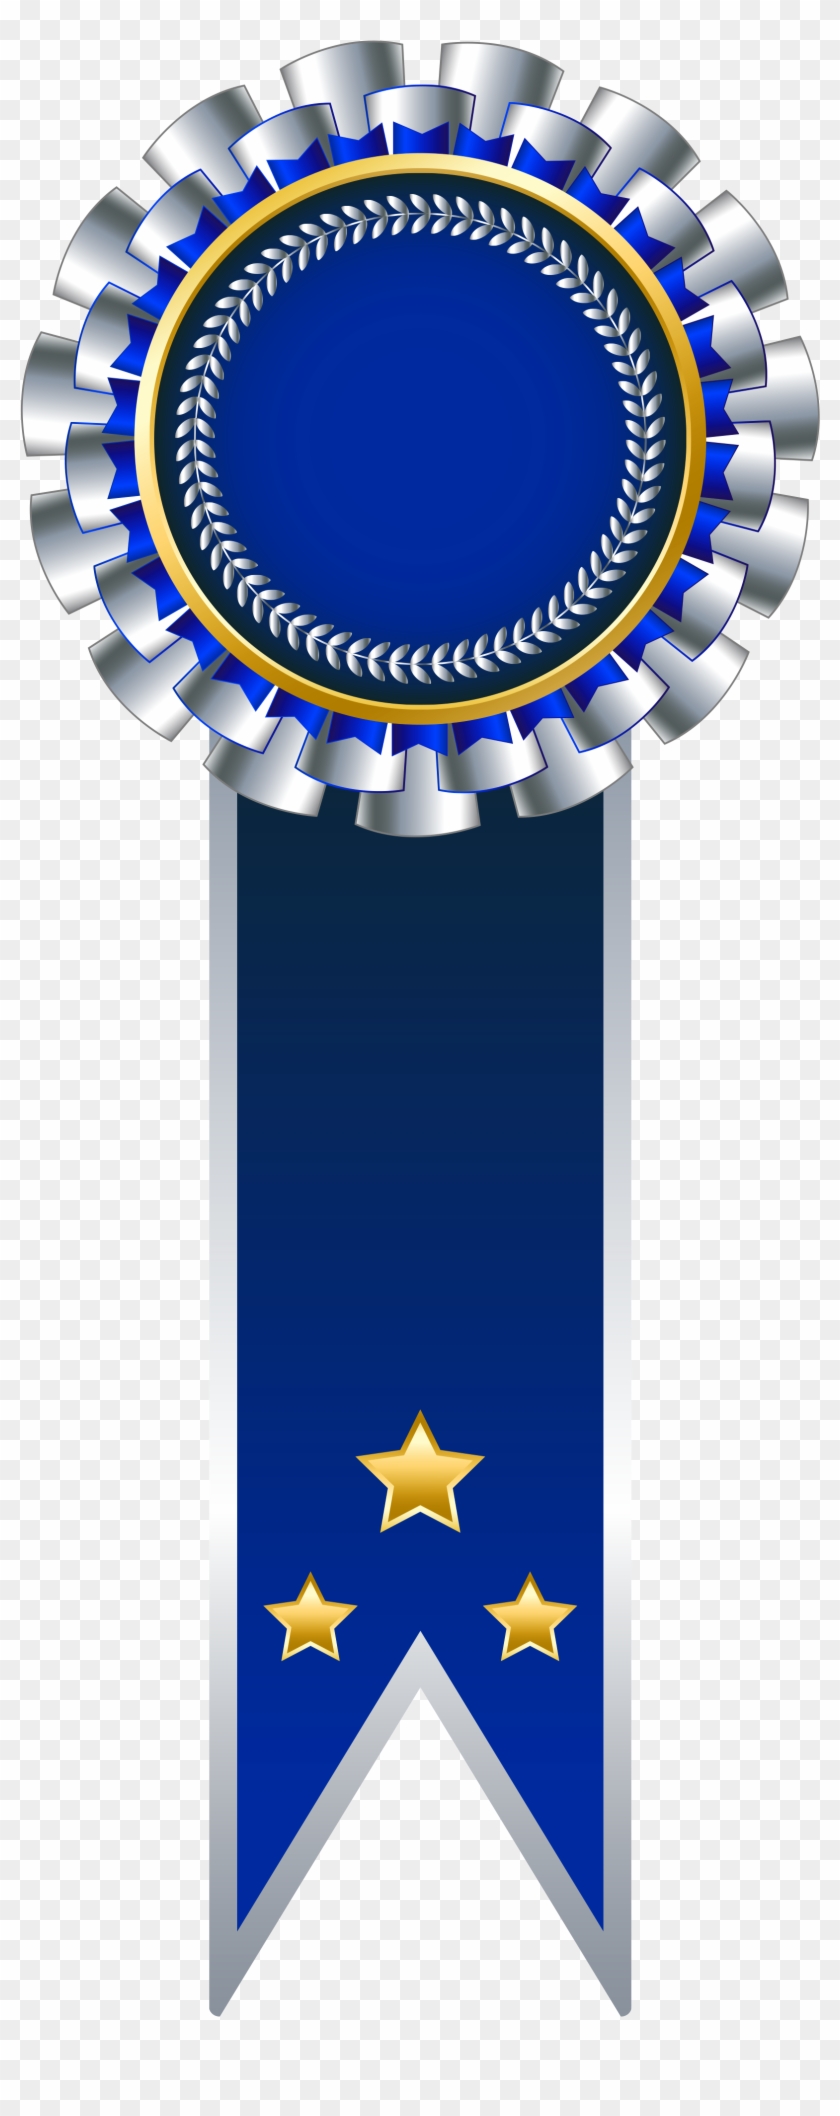 award banner clipart